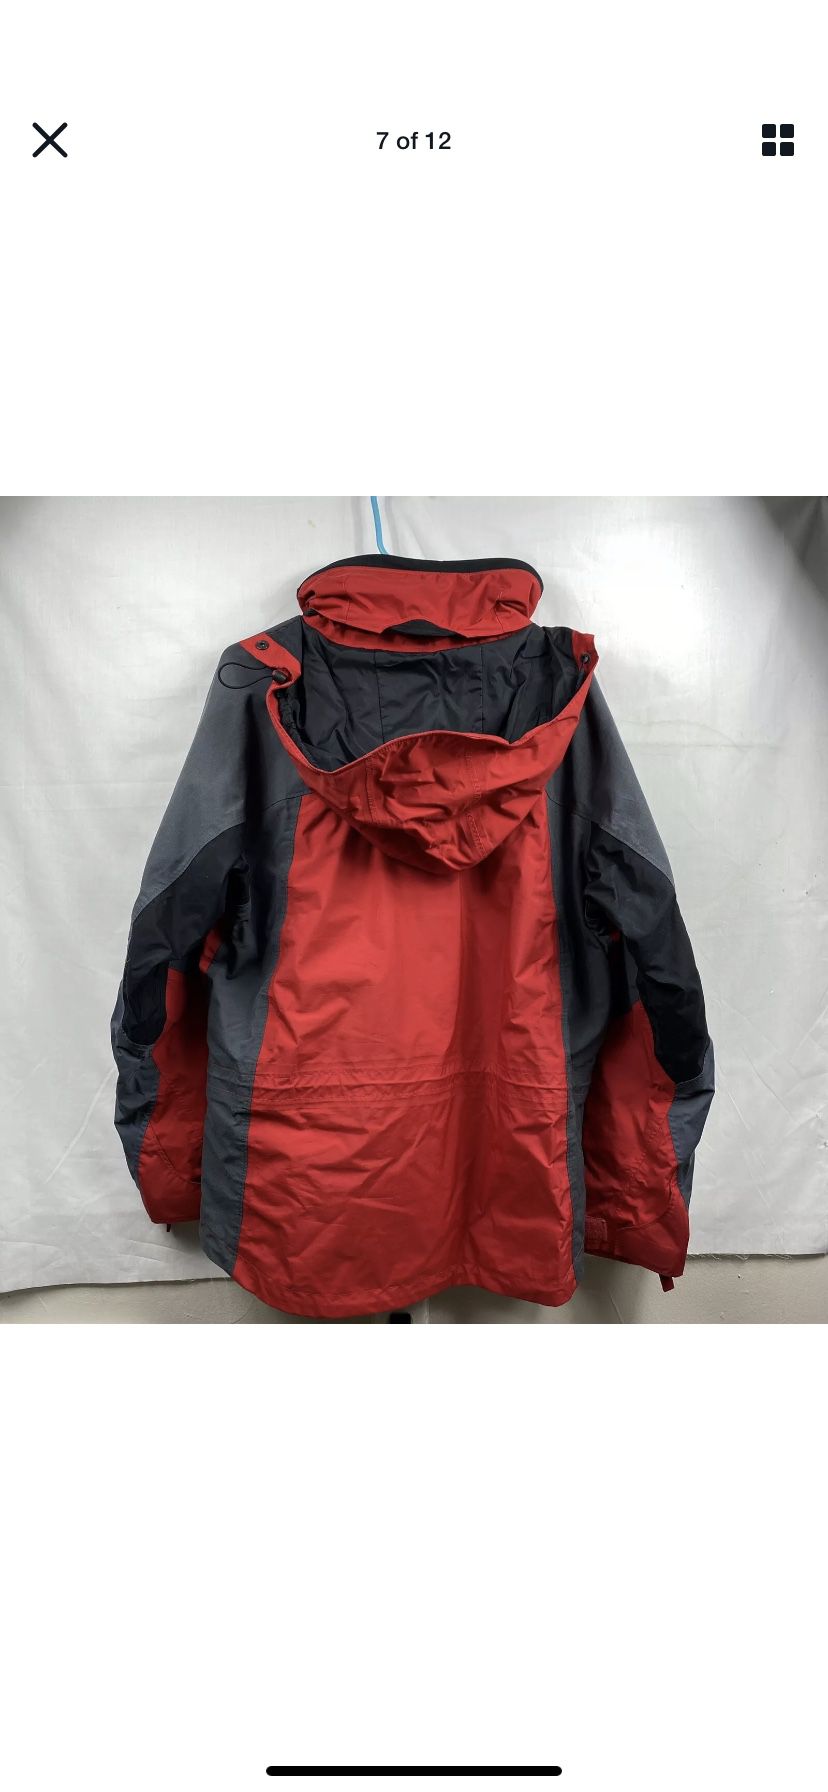 Columbia Sportswear Company Omni Tech Waterproof Breathable Red Jacket Sz.Large